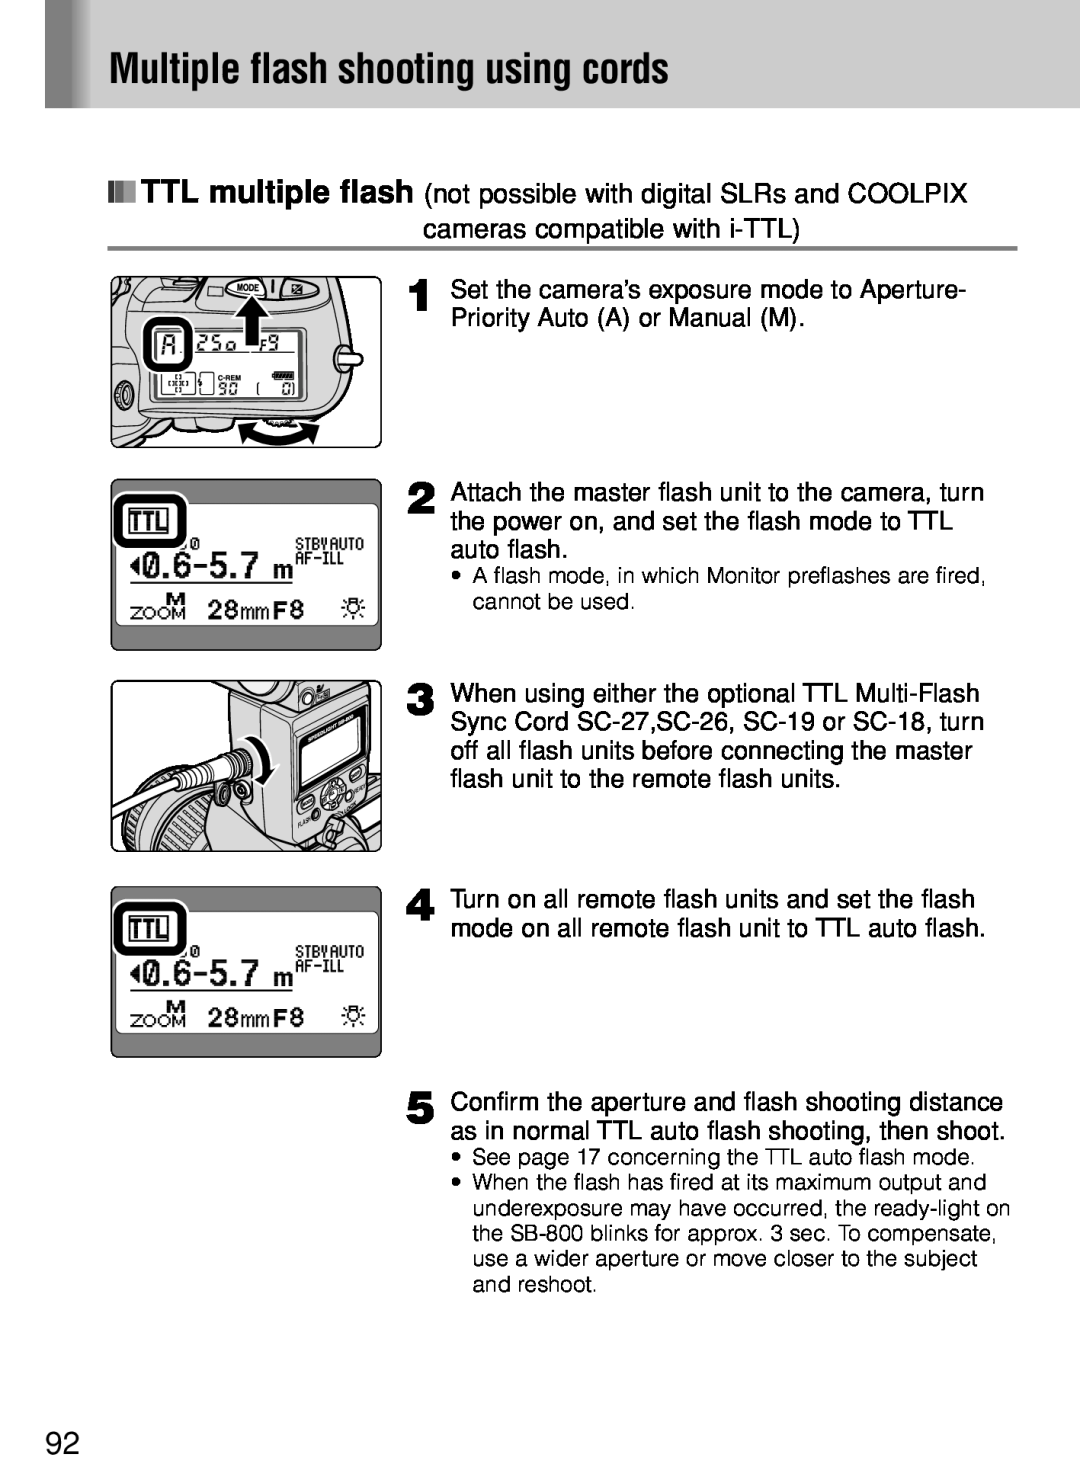 Nikon SB-800 instruction manual Multiple flash shooting using cords 